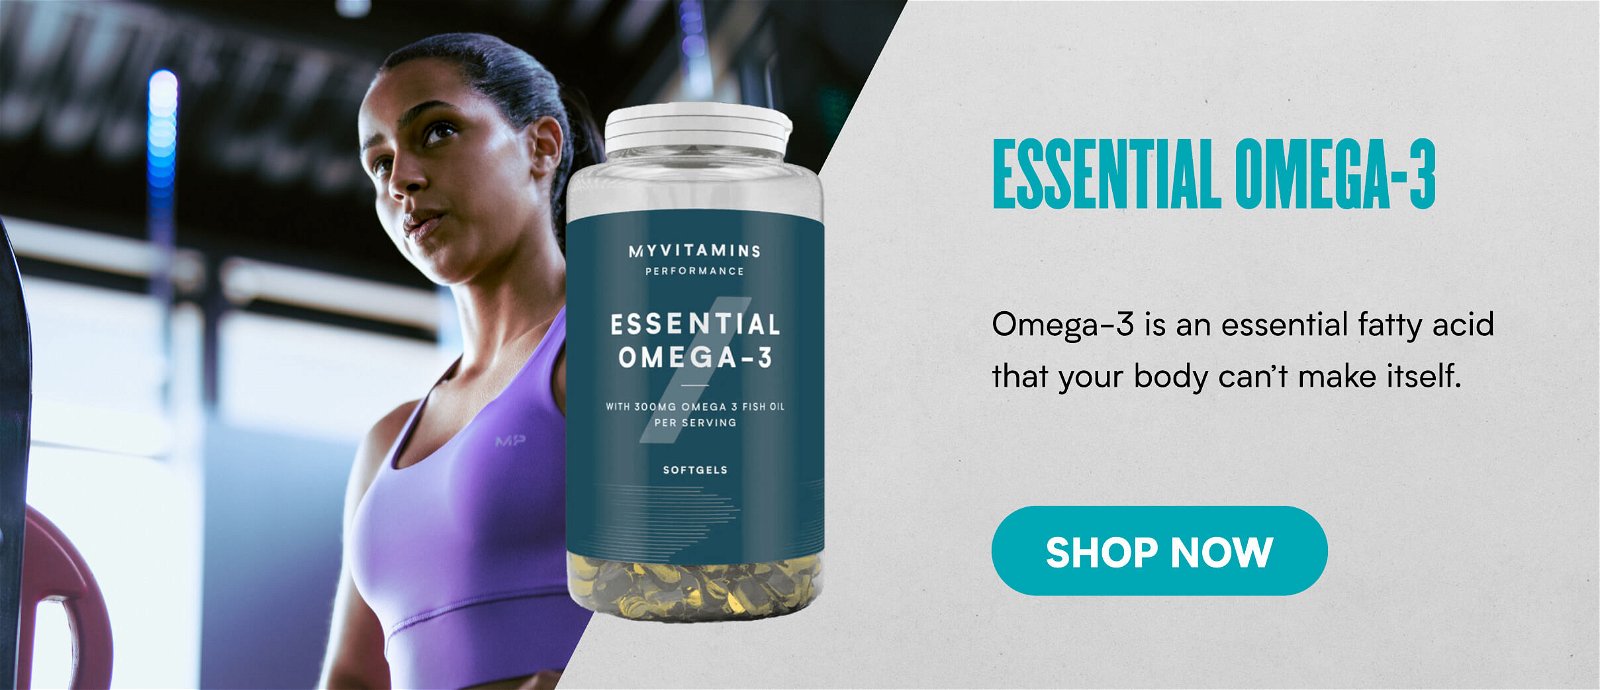 Essential Omega-3